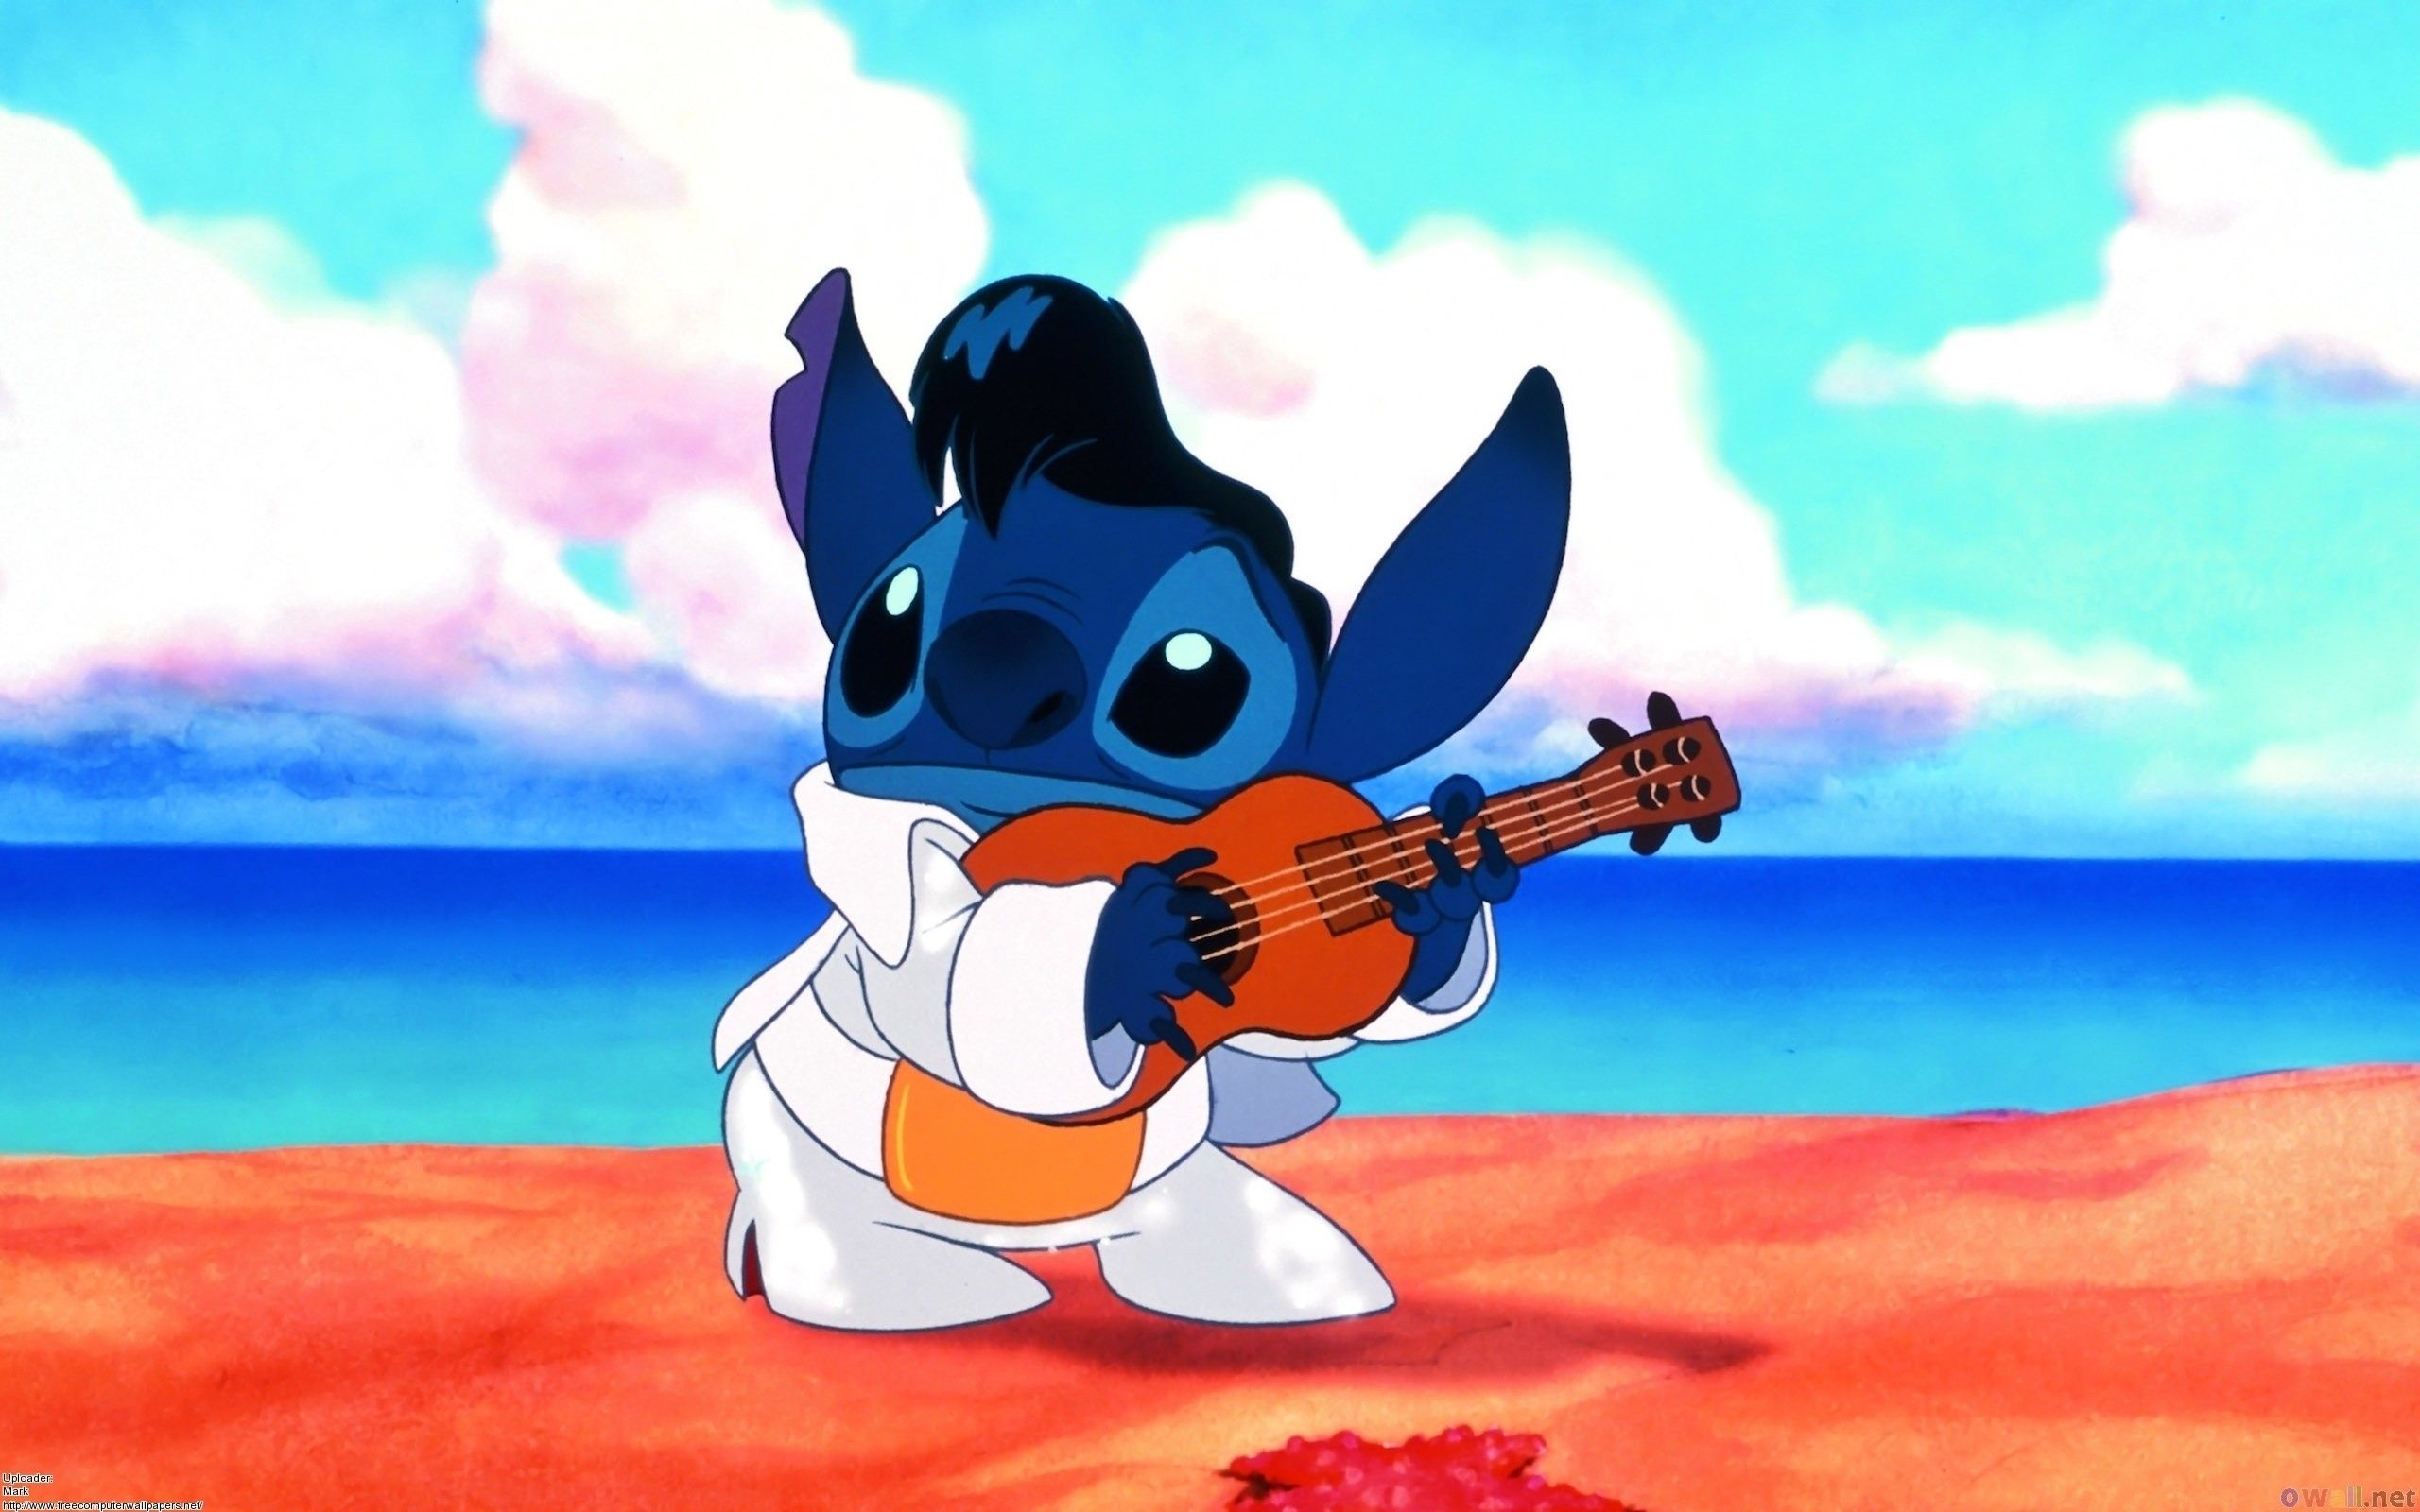  Stitch Hintergrundbild 2560x1600. Disney Lilo & Stitch Guitar Cartoons wallpaper background